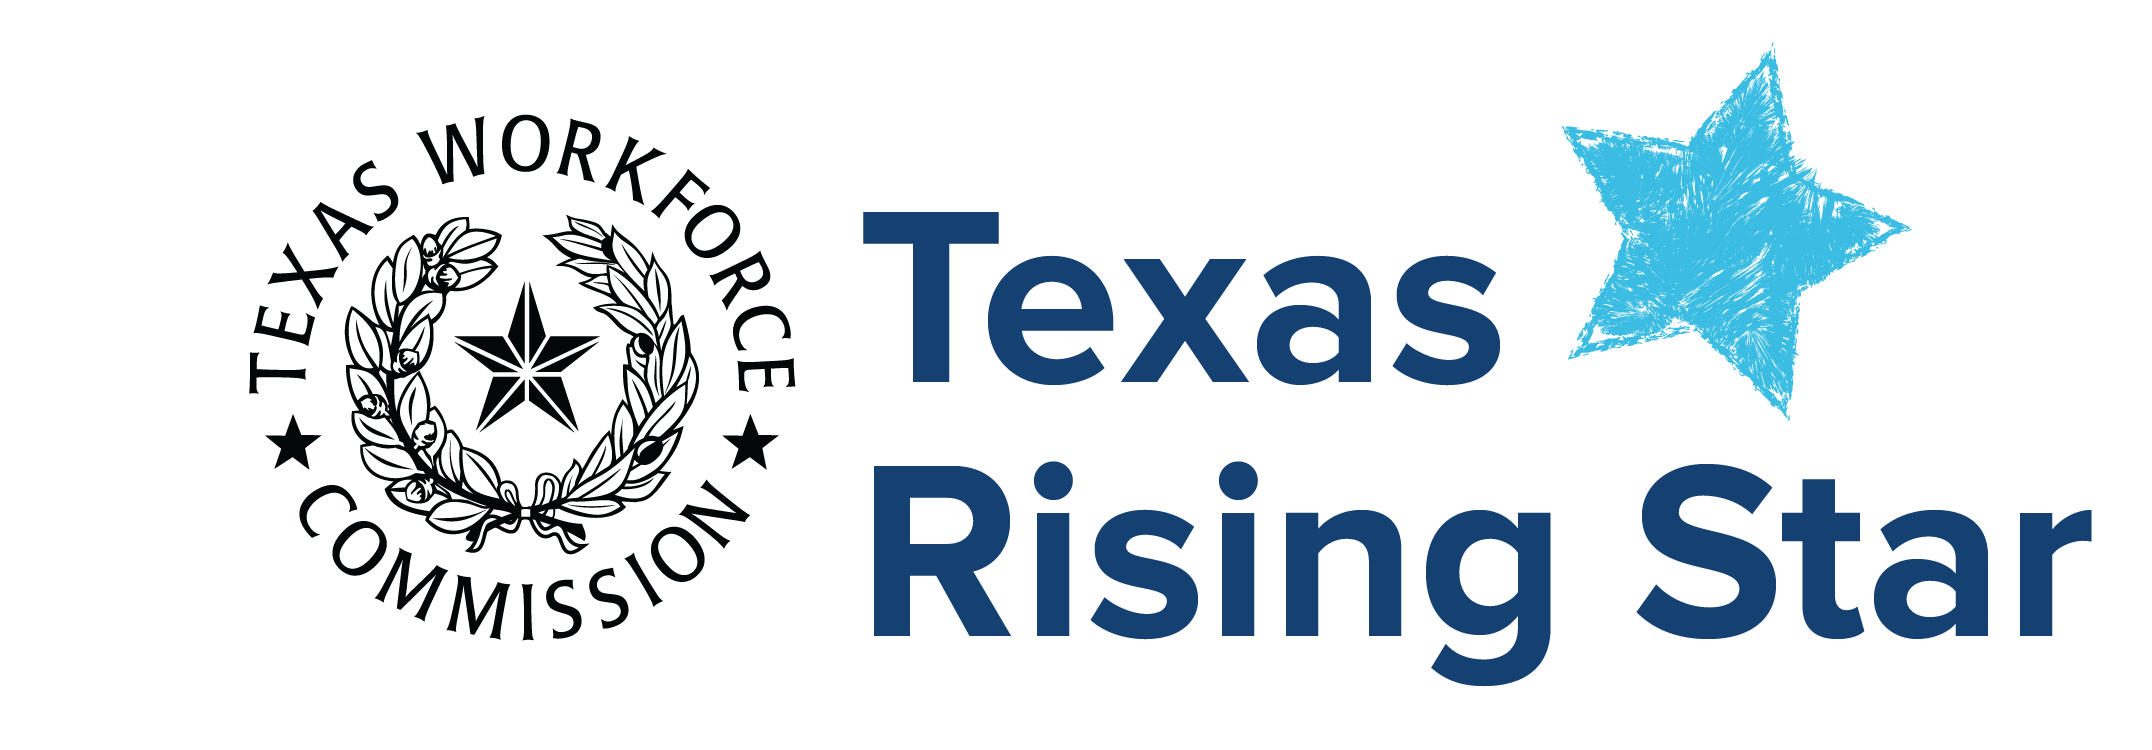 Texas rising star logo